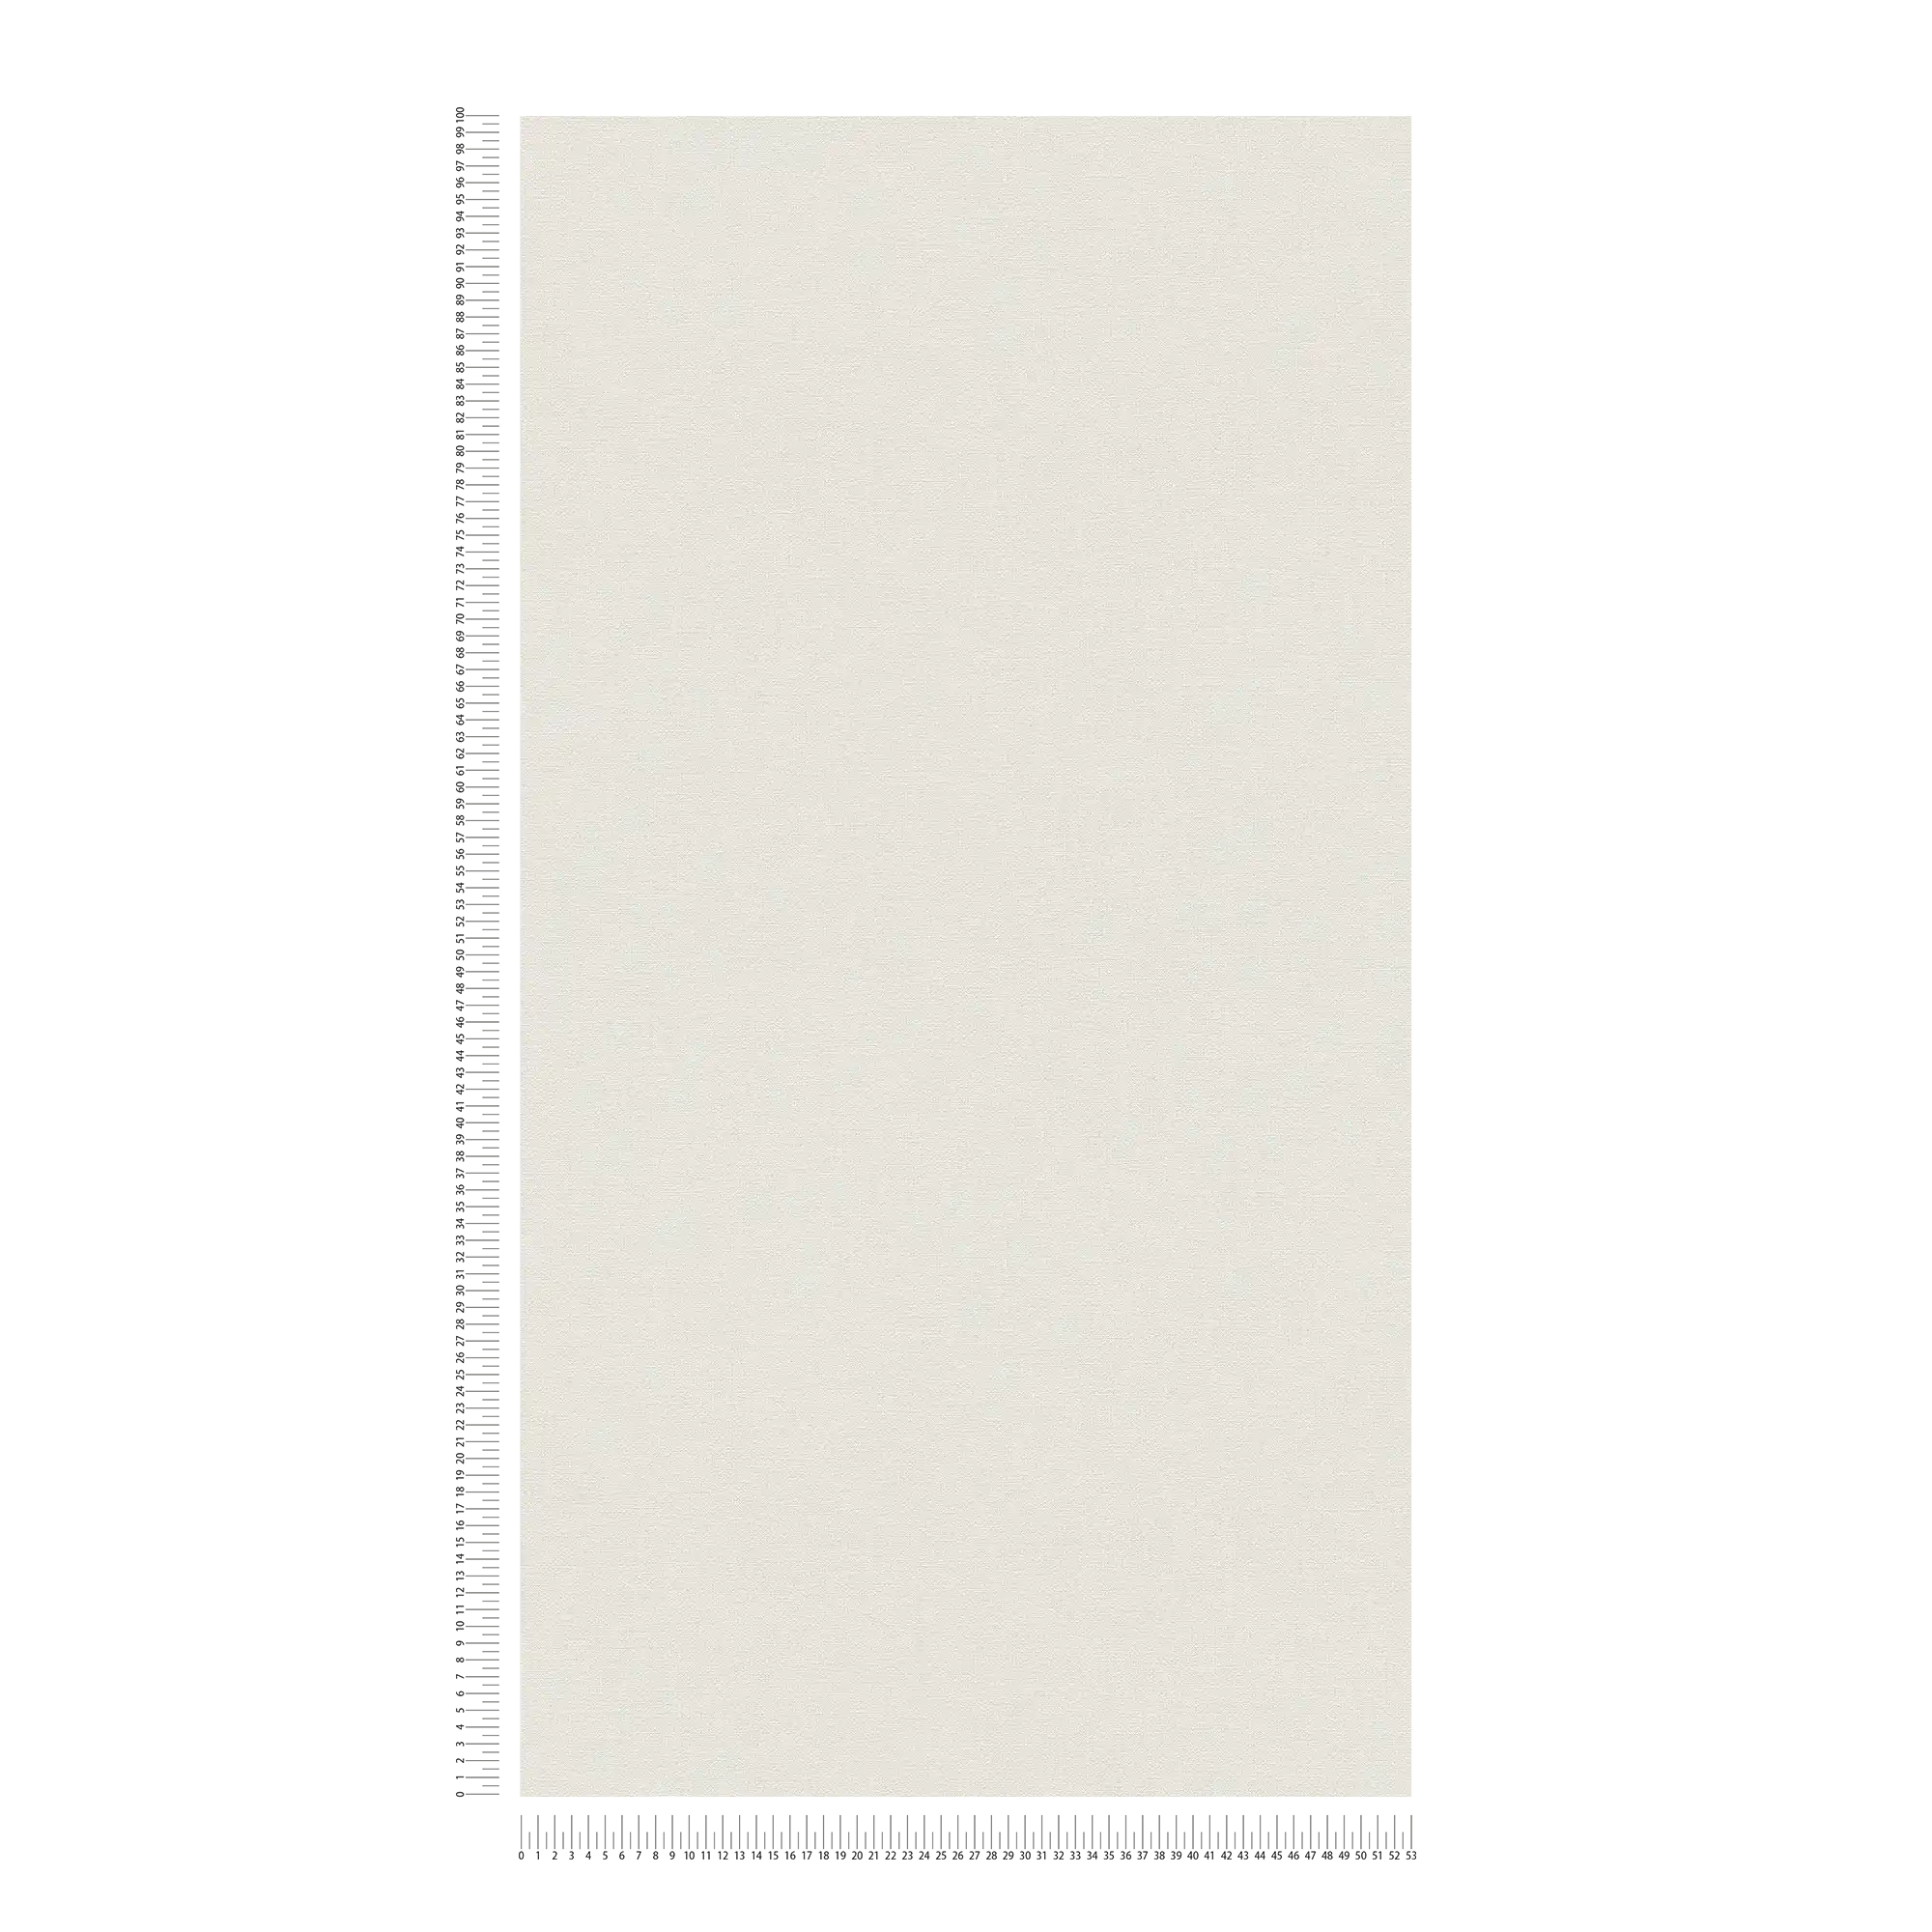             Textile optic wallpaper plain design PVC-free - white, cream
        